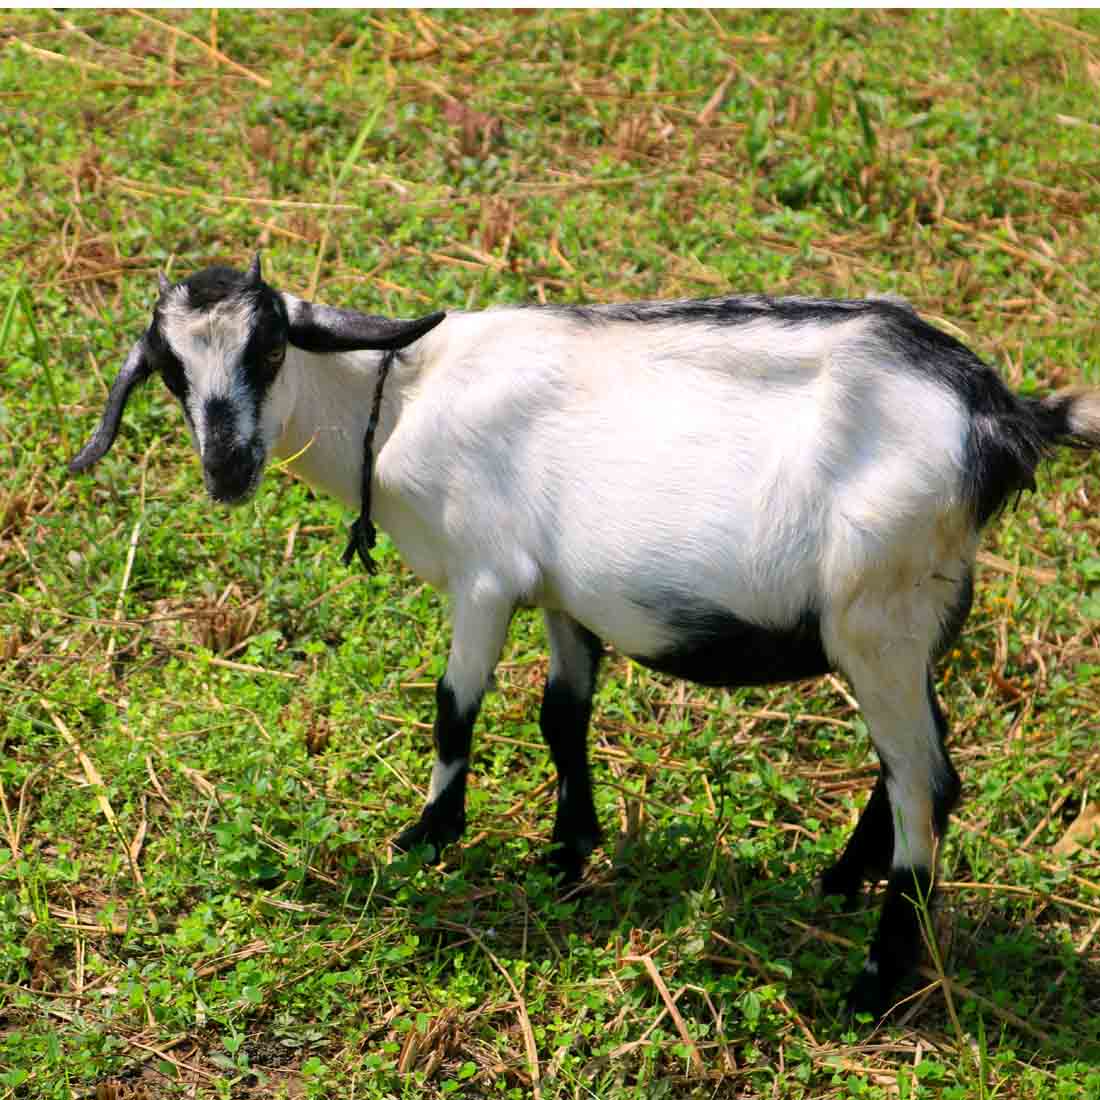 Goat Khasi photography in bangladesh Nimbu Tree preview image.